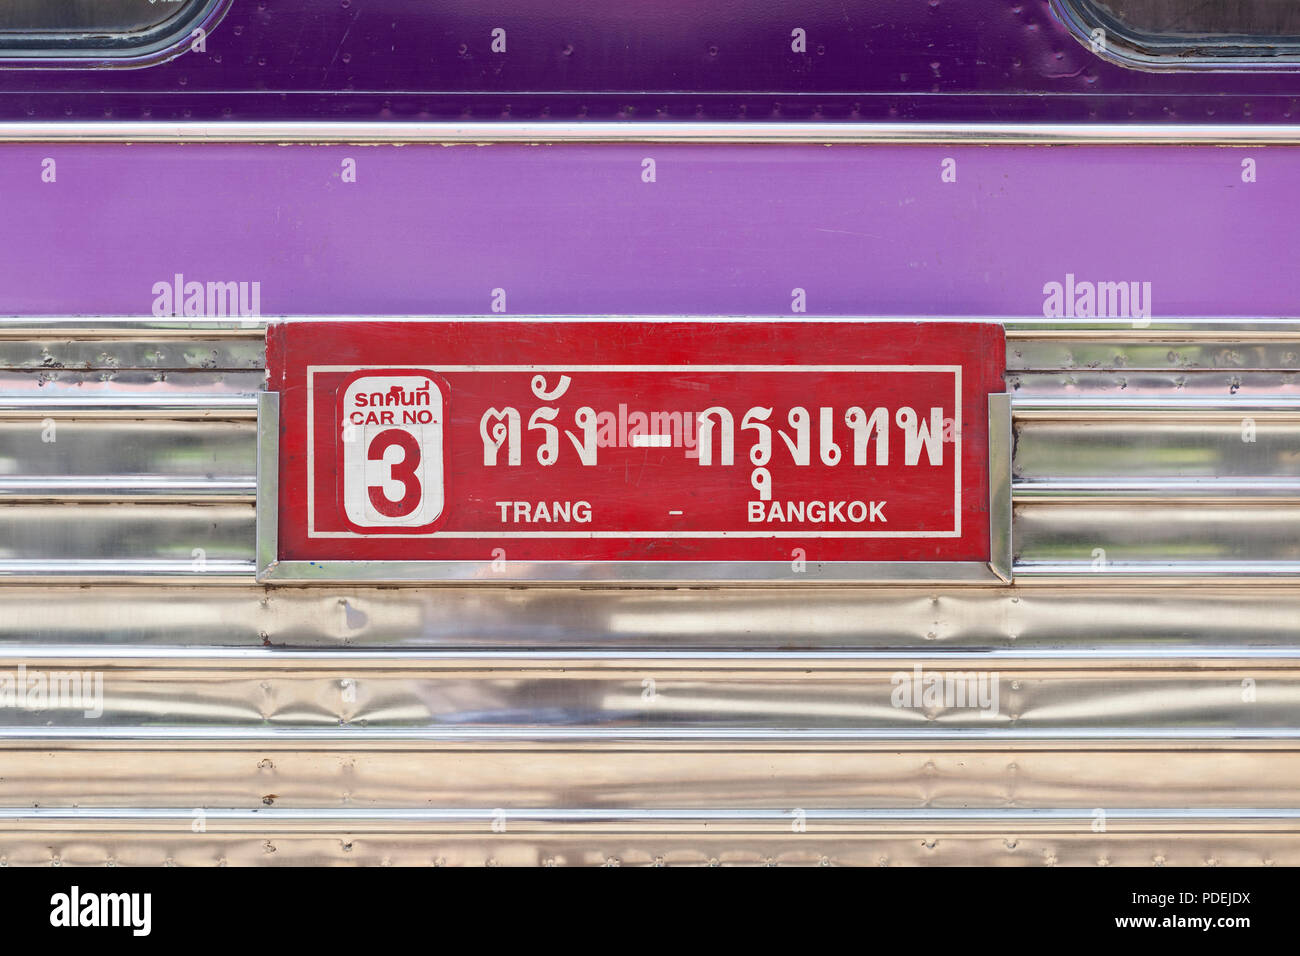 Bangkok to Trang  train carriage sign, Thailand Stock Photo